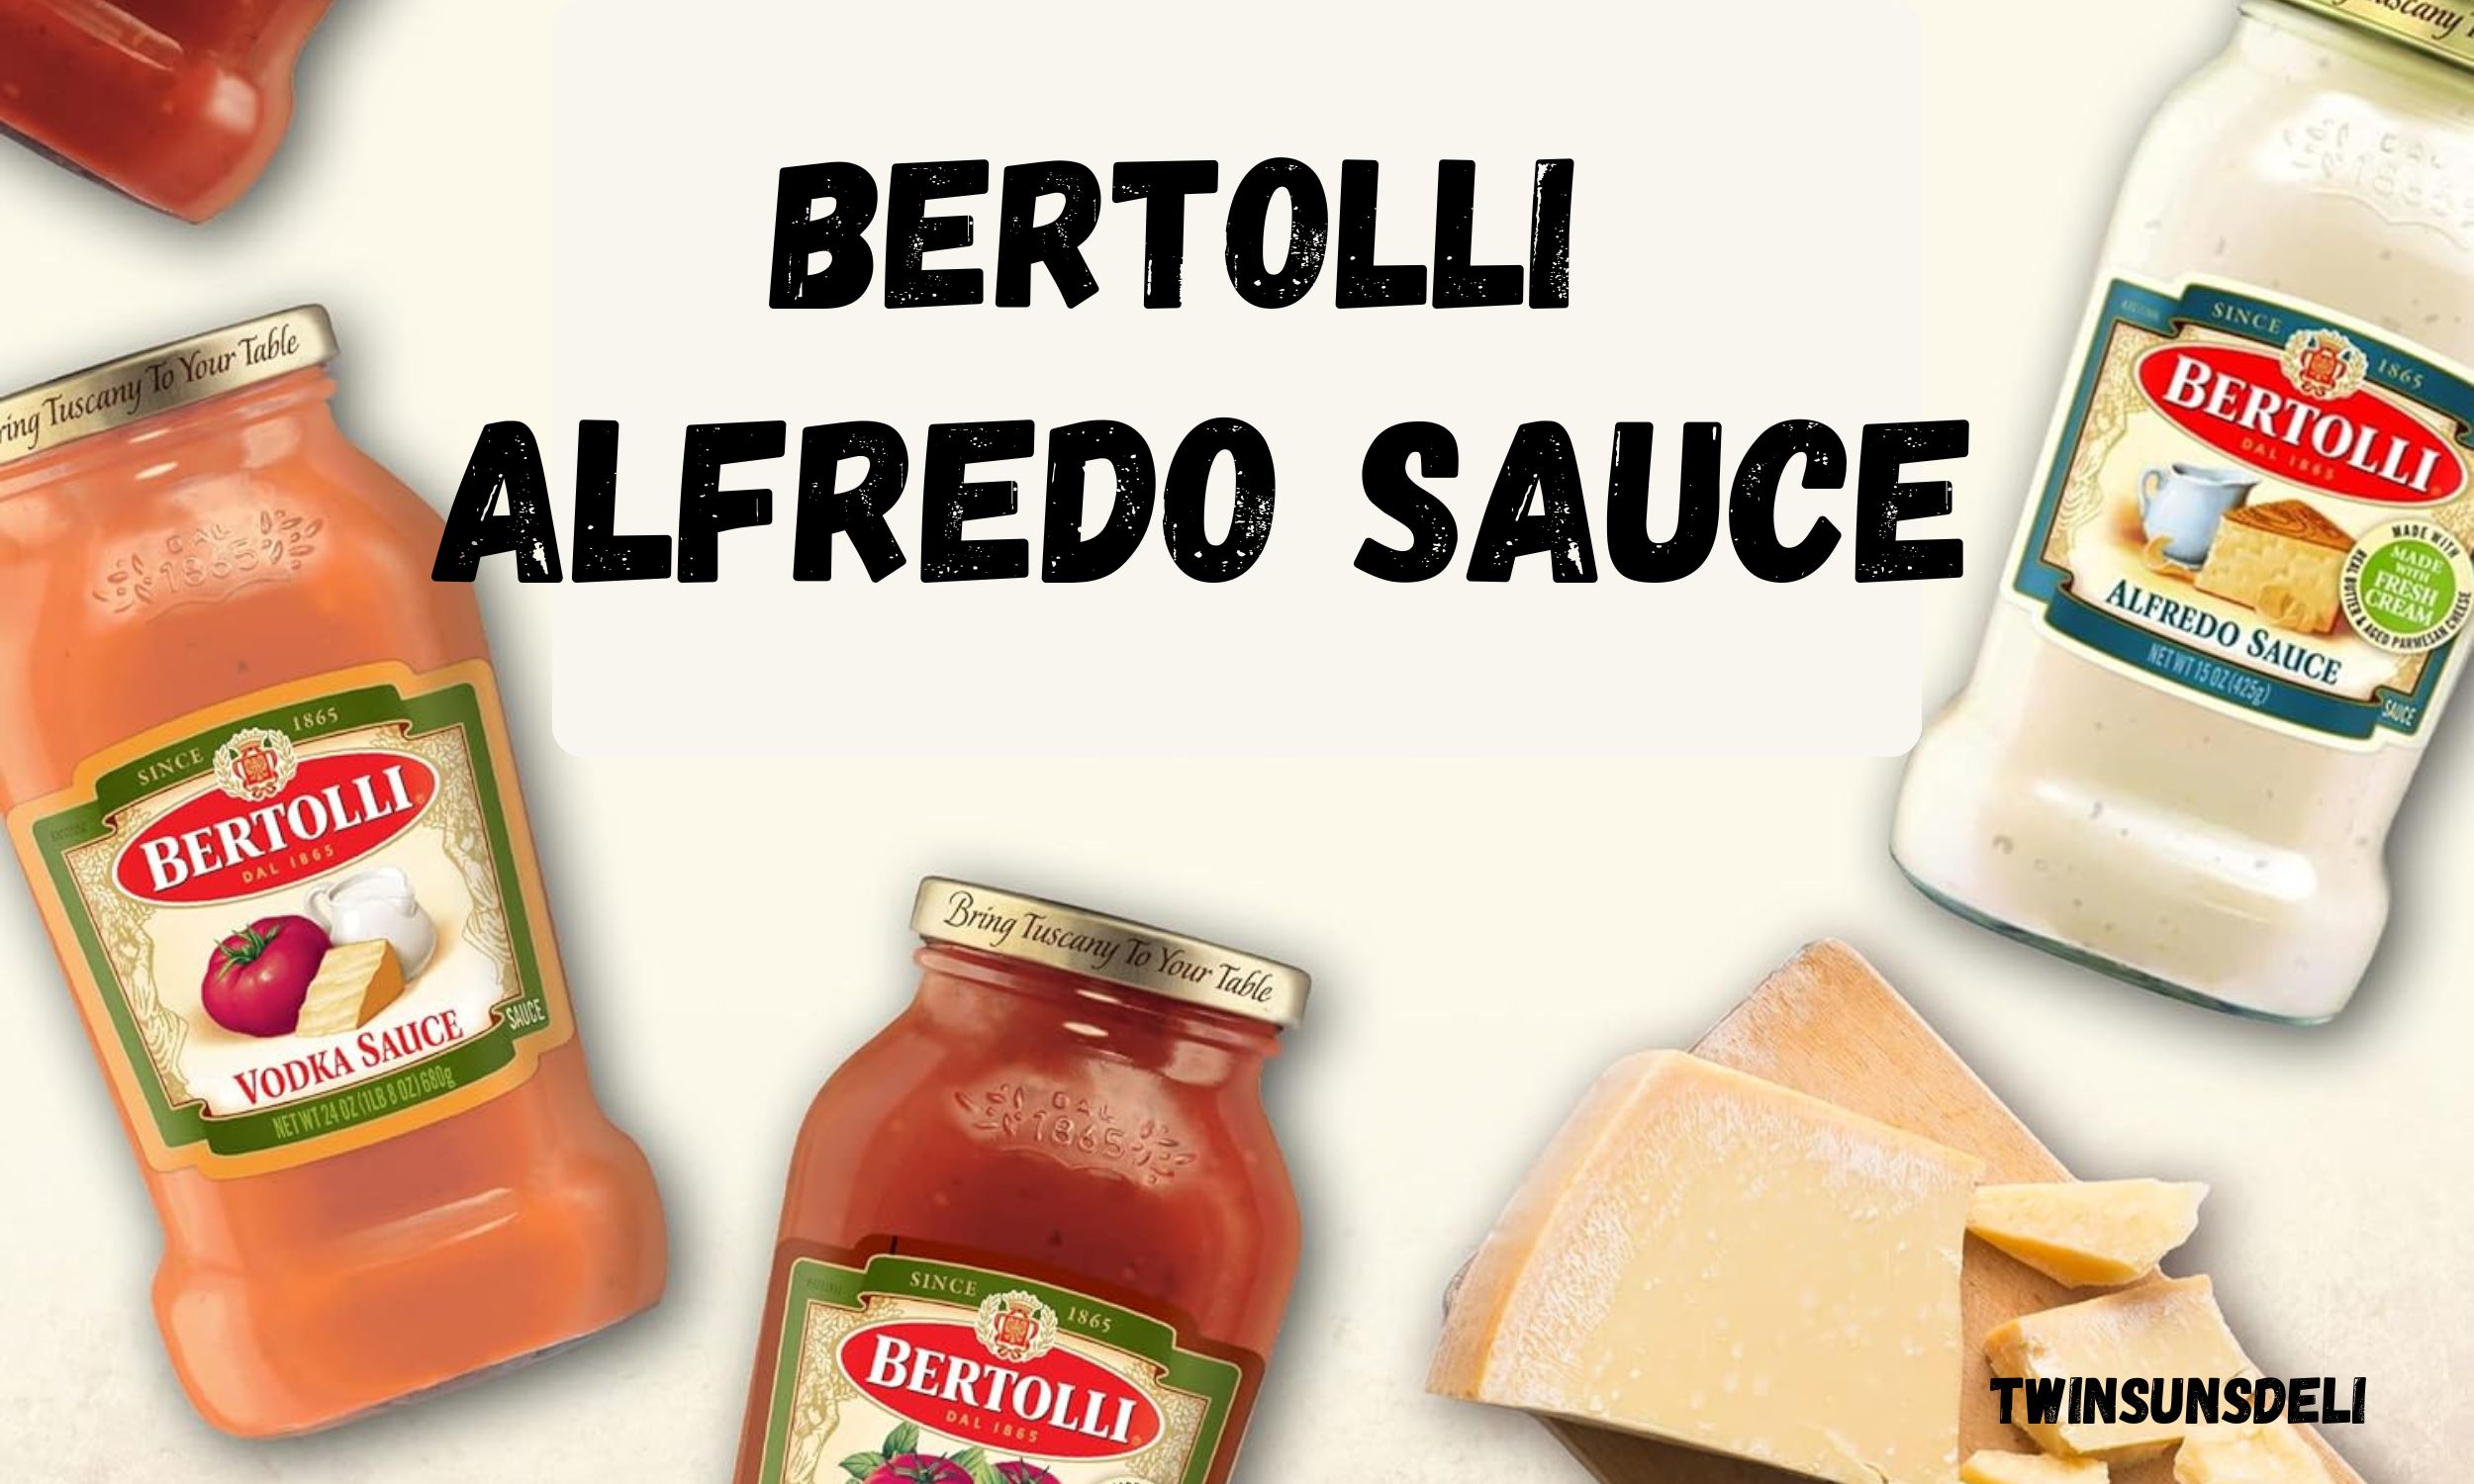 Is Bertolli Alfredo sauce gluten-free?